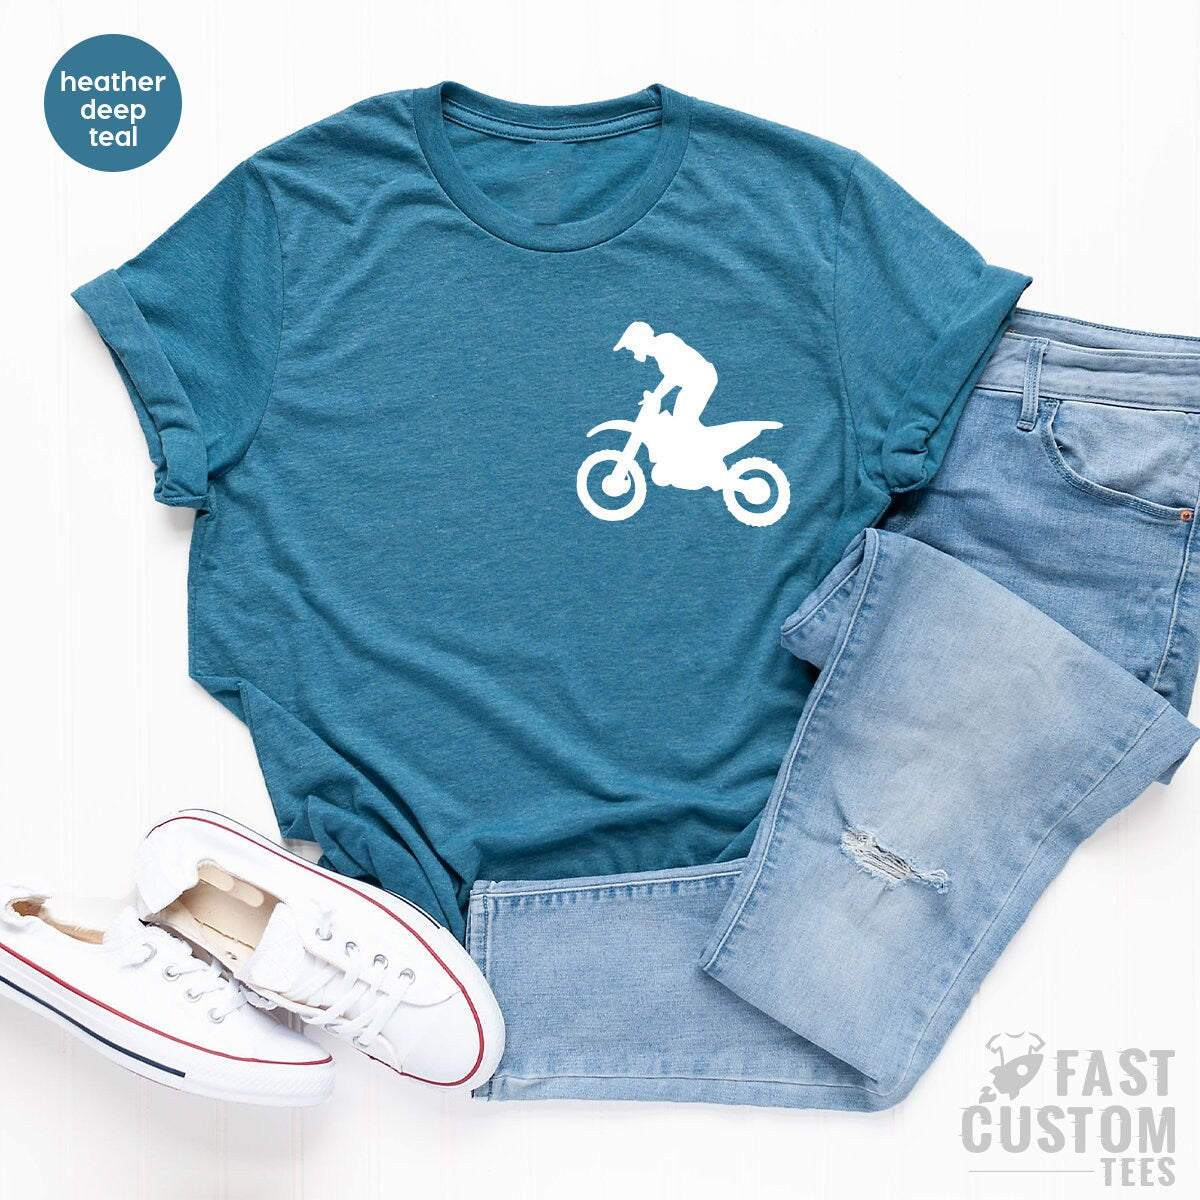 Motorcross Shirt, Biker Lover Shirt, Motorcycle Shirt, Riding TShirt, Off Roading T Shirt, Gift For Biker, Dirtbike Shirt, Riding Tee - Fastdeliverytees.com